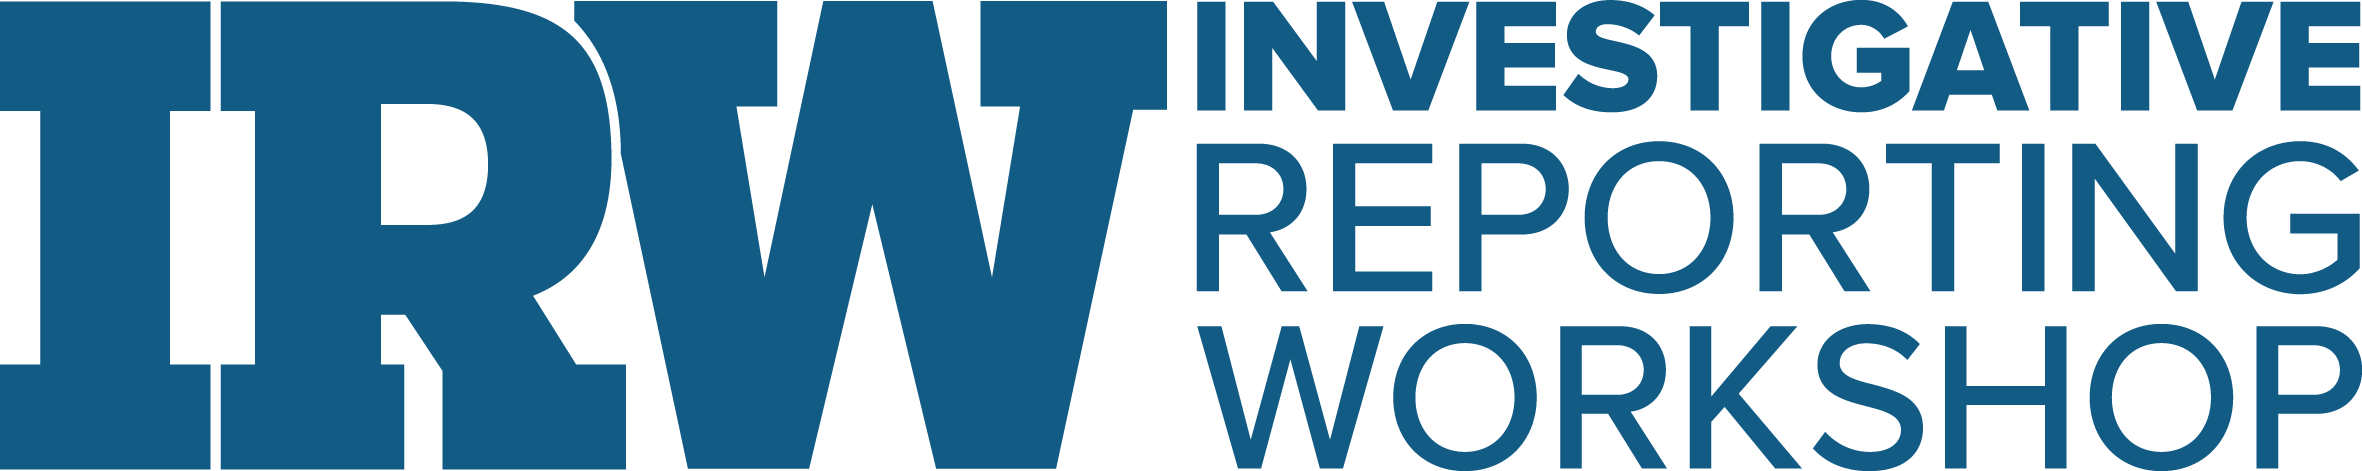 Investigative Reporting Workshop Logo